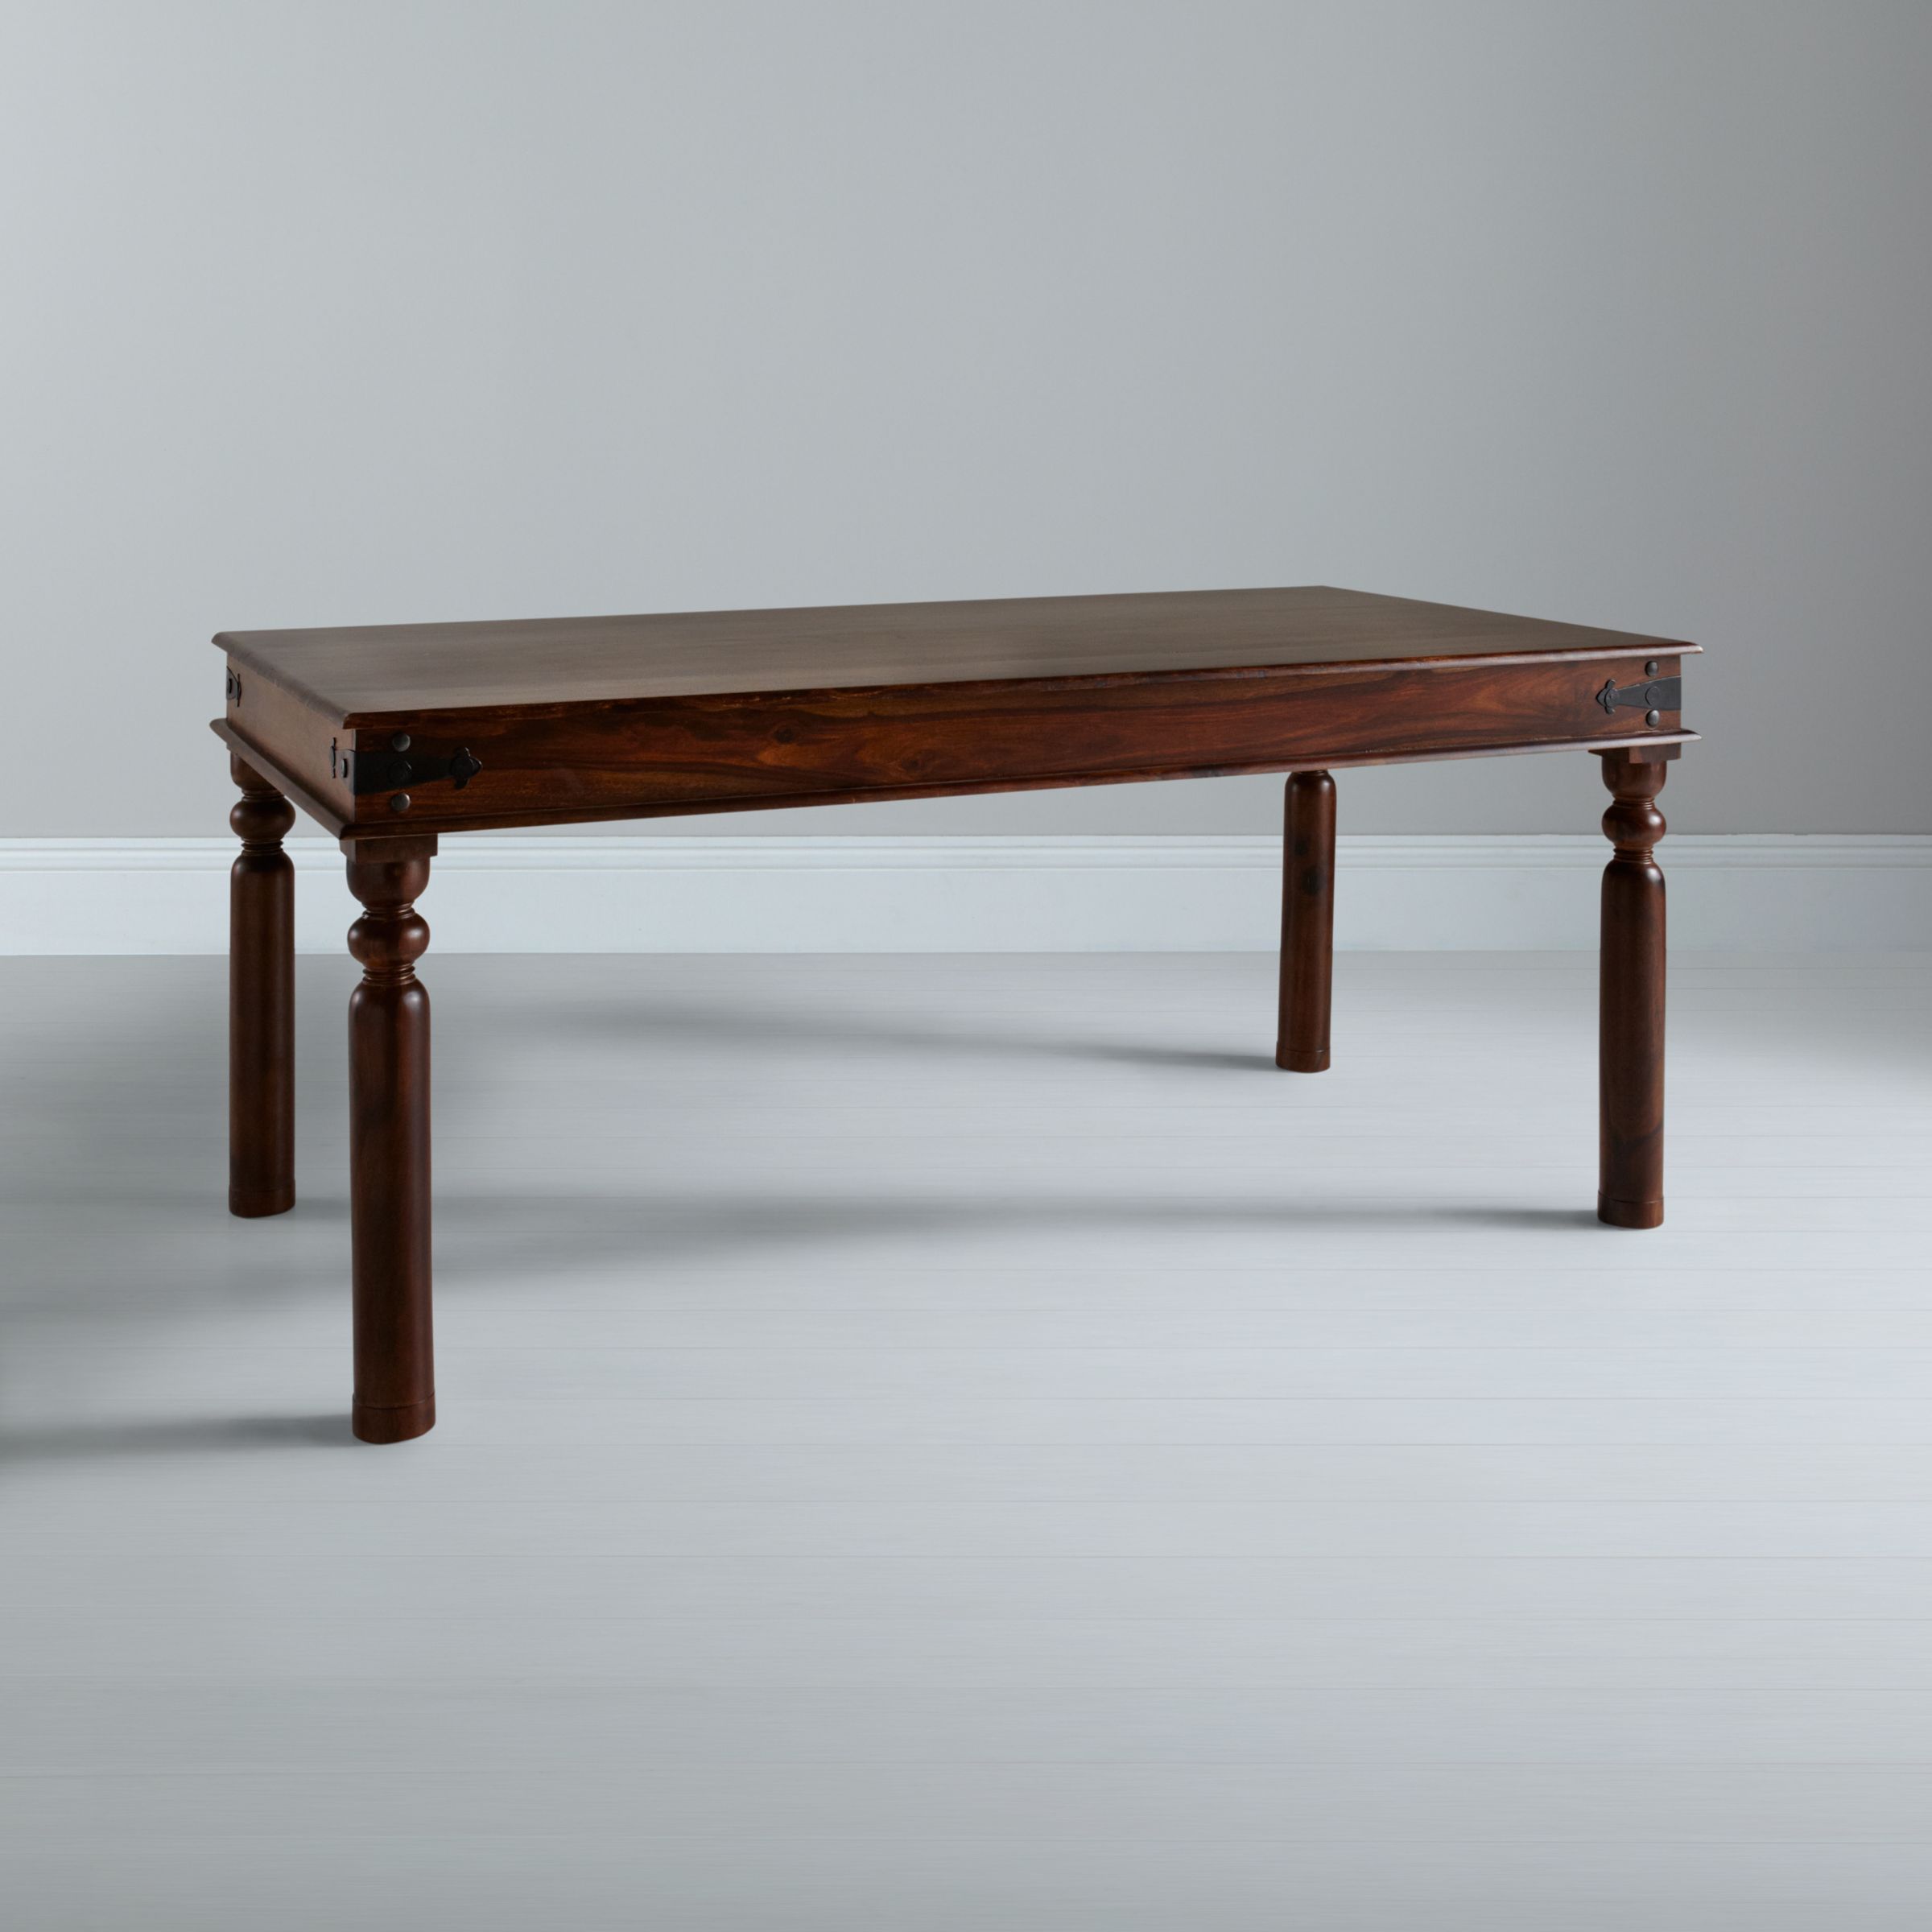 John Lewis Maharani 6 Seater Dining Table, width 180cm